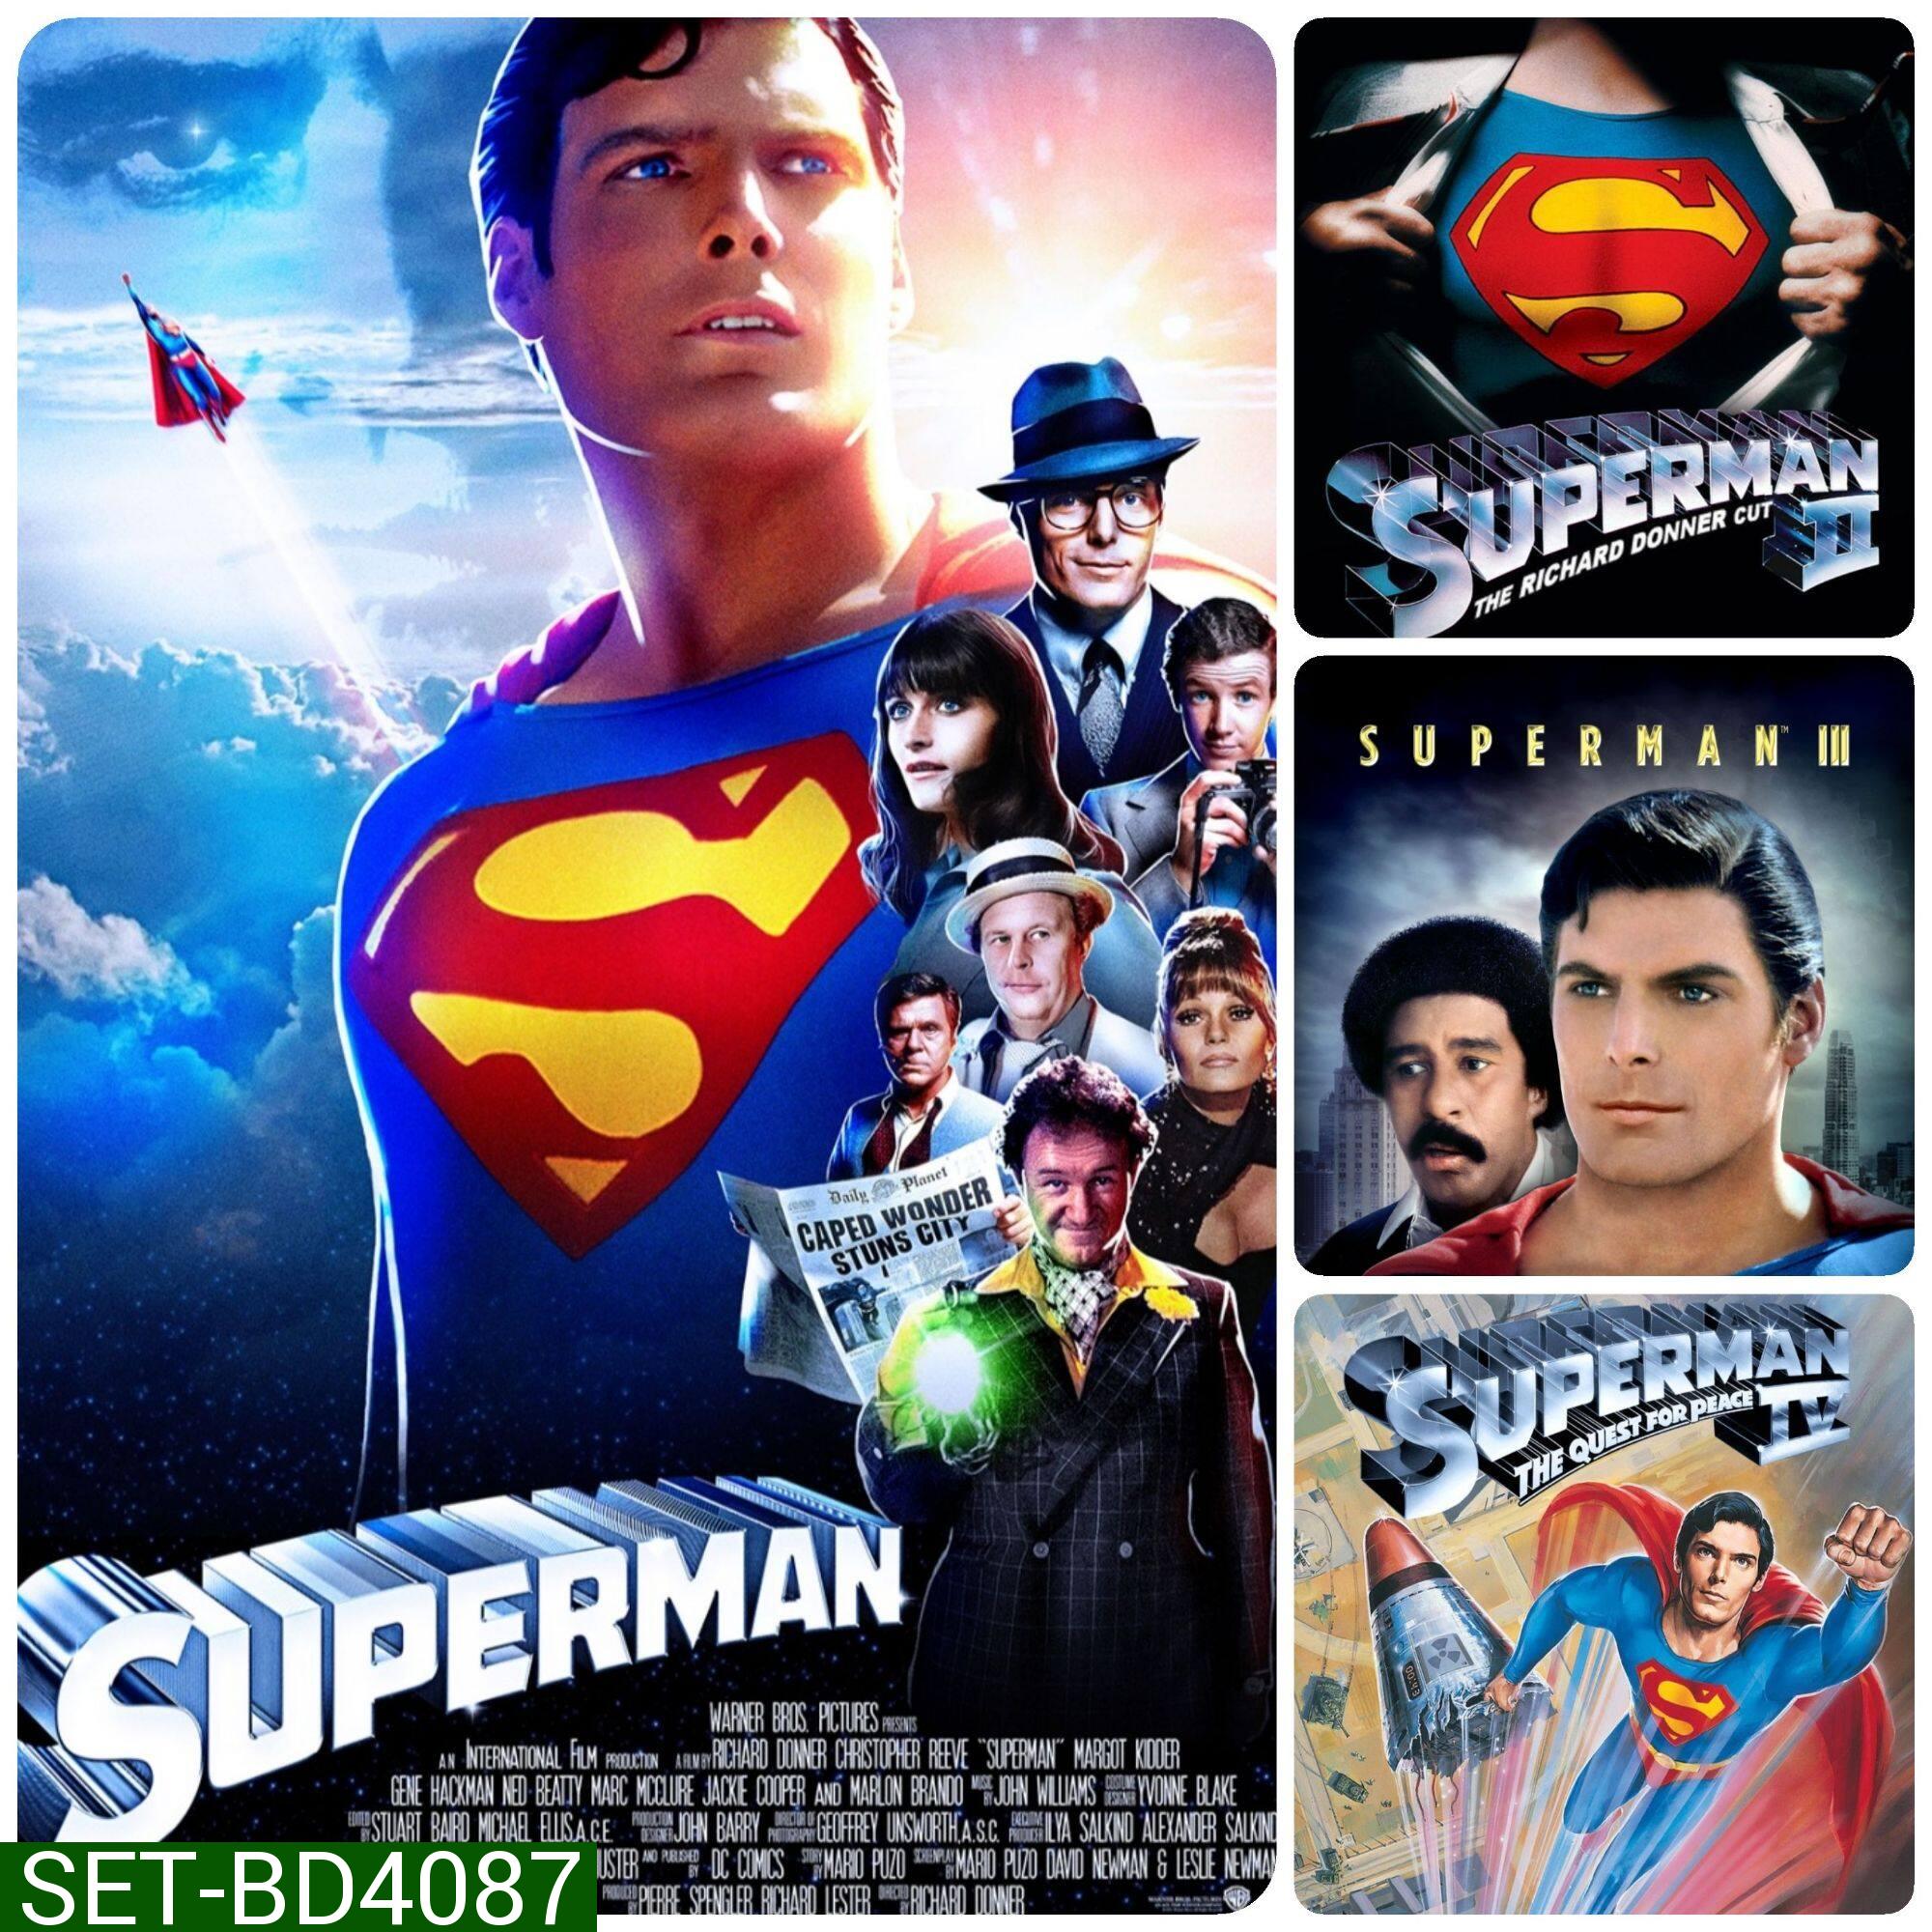 Superman Bluray หนังราคาถูก พากย์ไทย/อังกฤษ/มีซับไทย มีเก็บปลายทาง